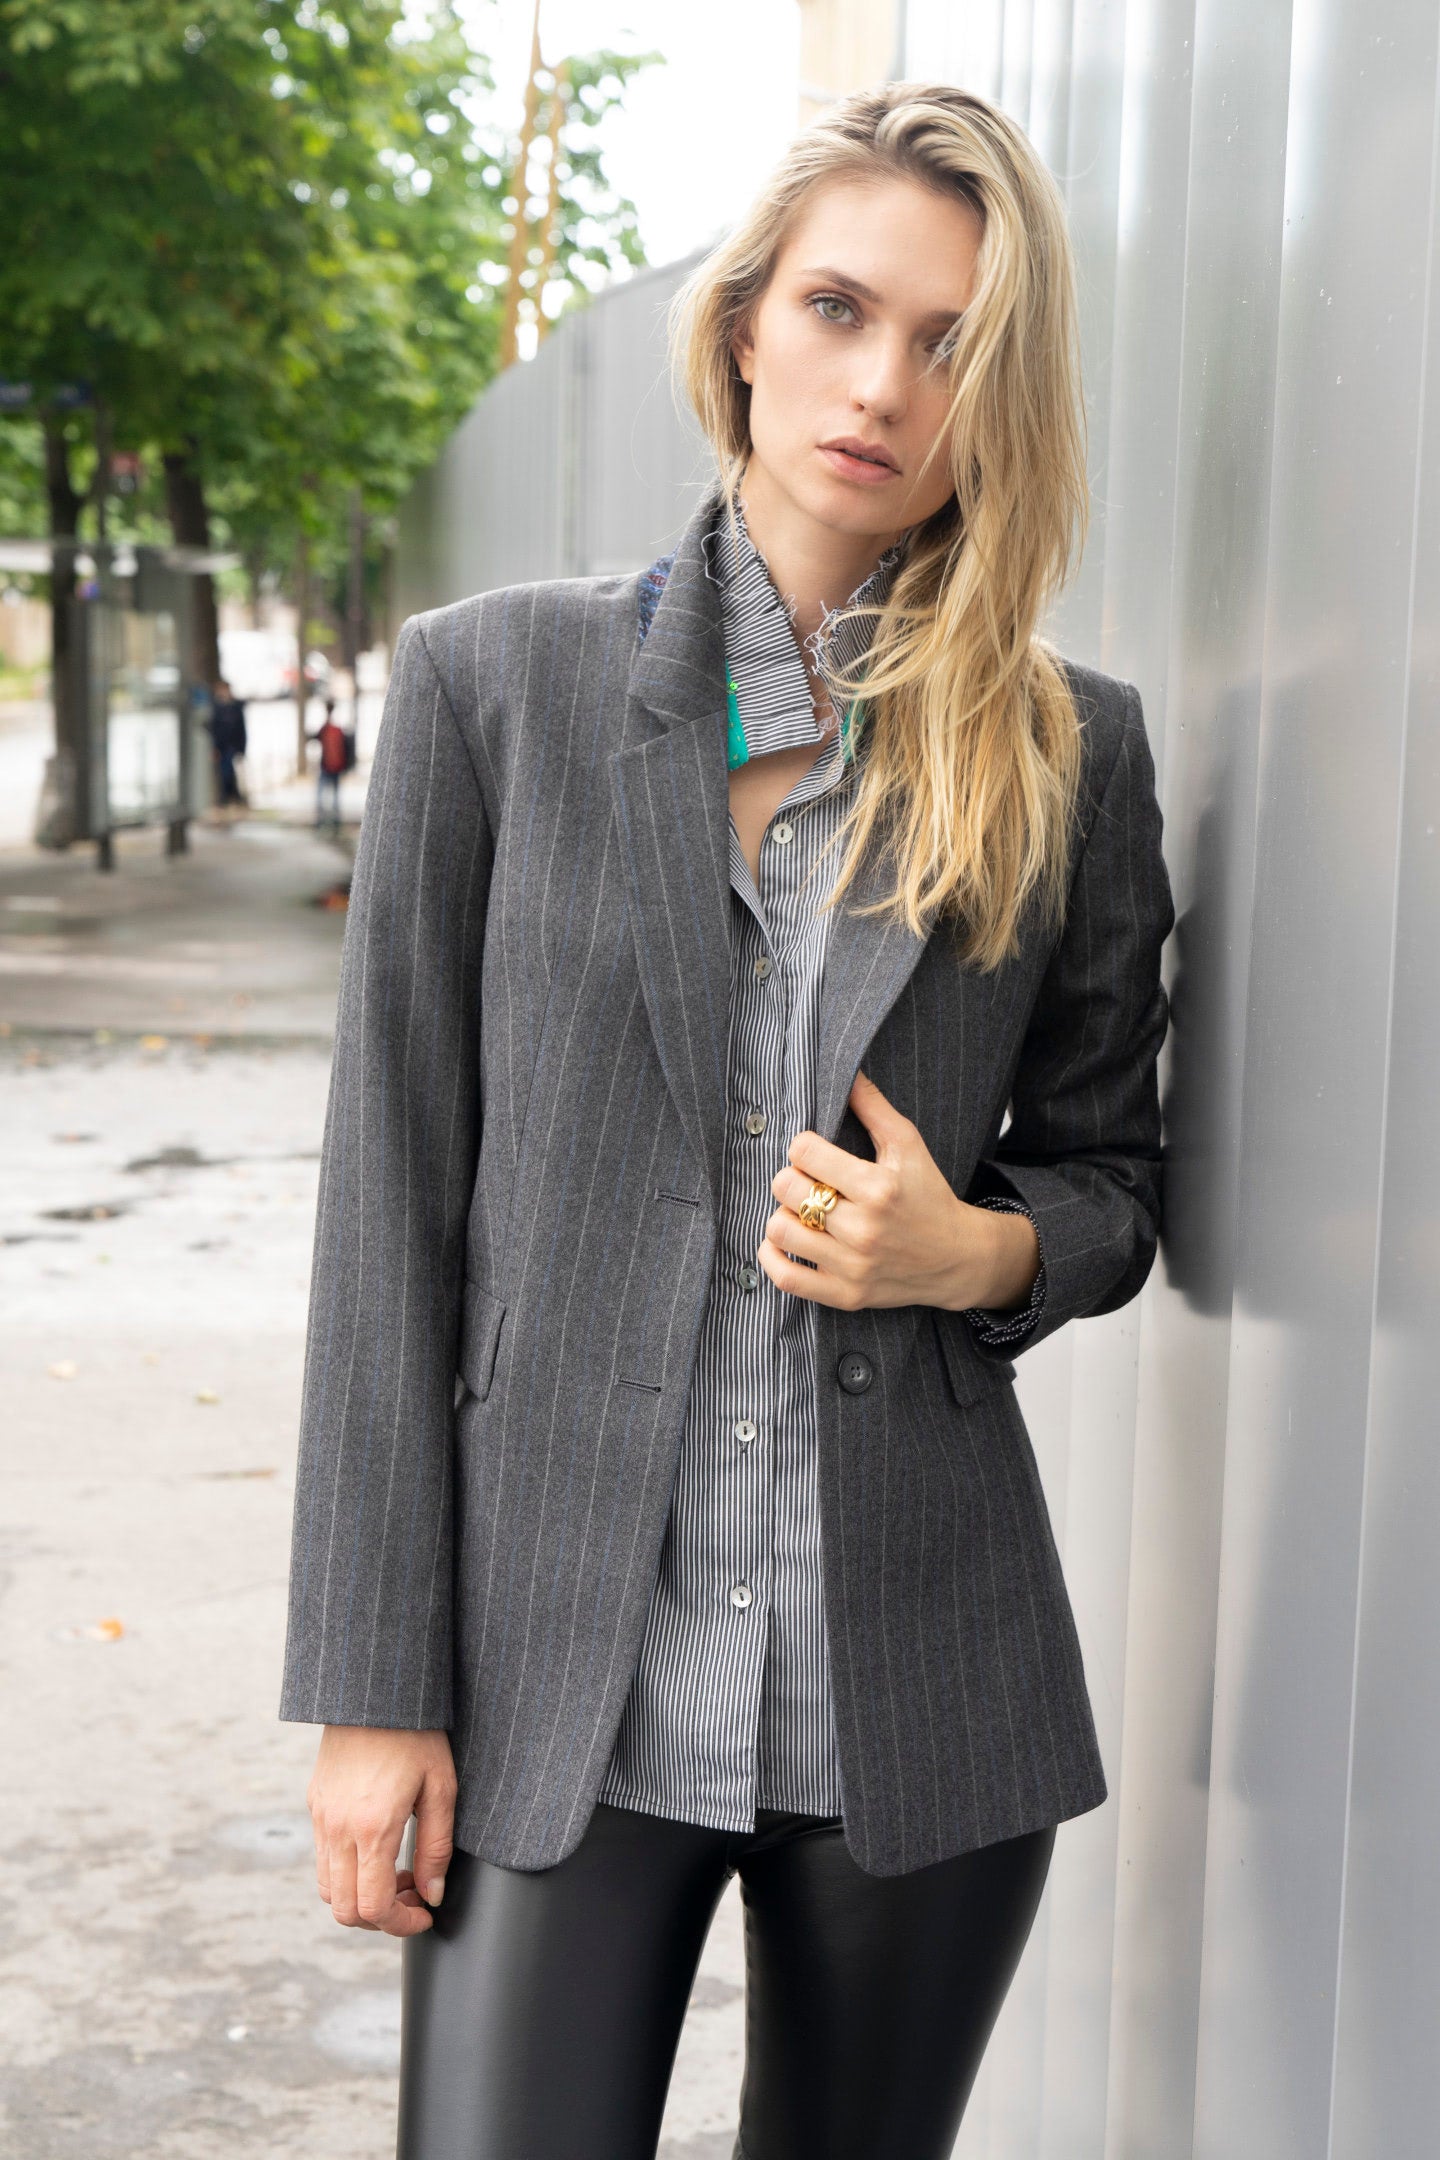 La Audrey - Oversized blazer jacket Wool with white chalk stripes Blue & gold paisley print lining